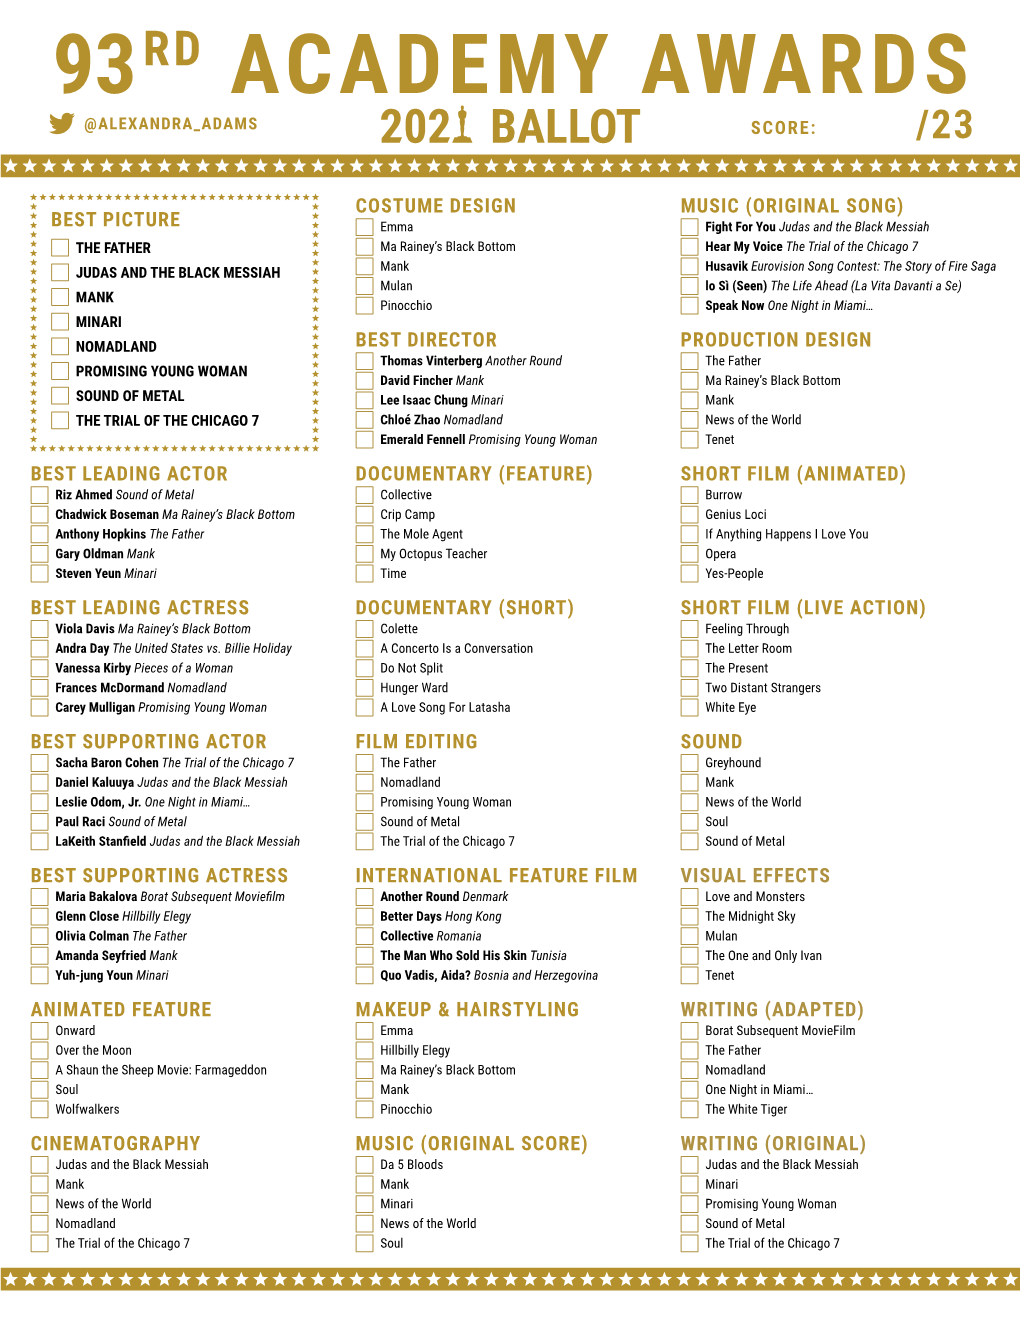 93Rd Academy Awards @Alexandra Adams Score: /23